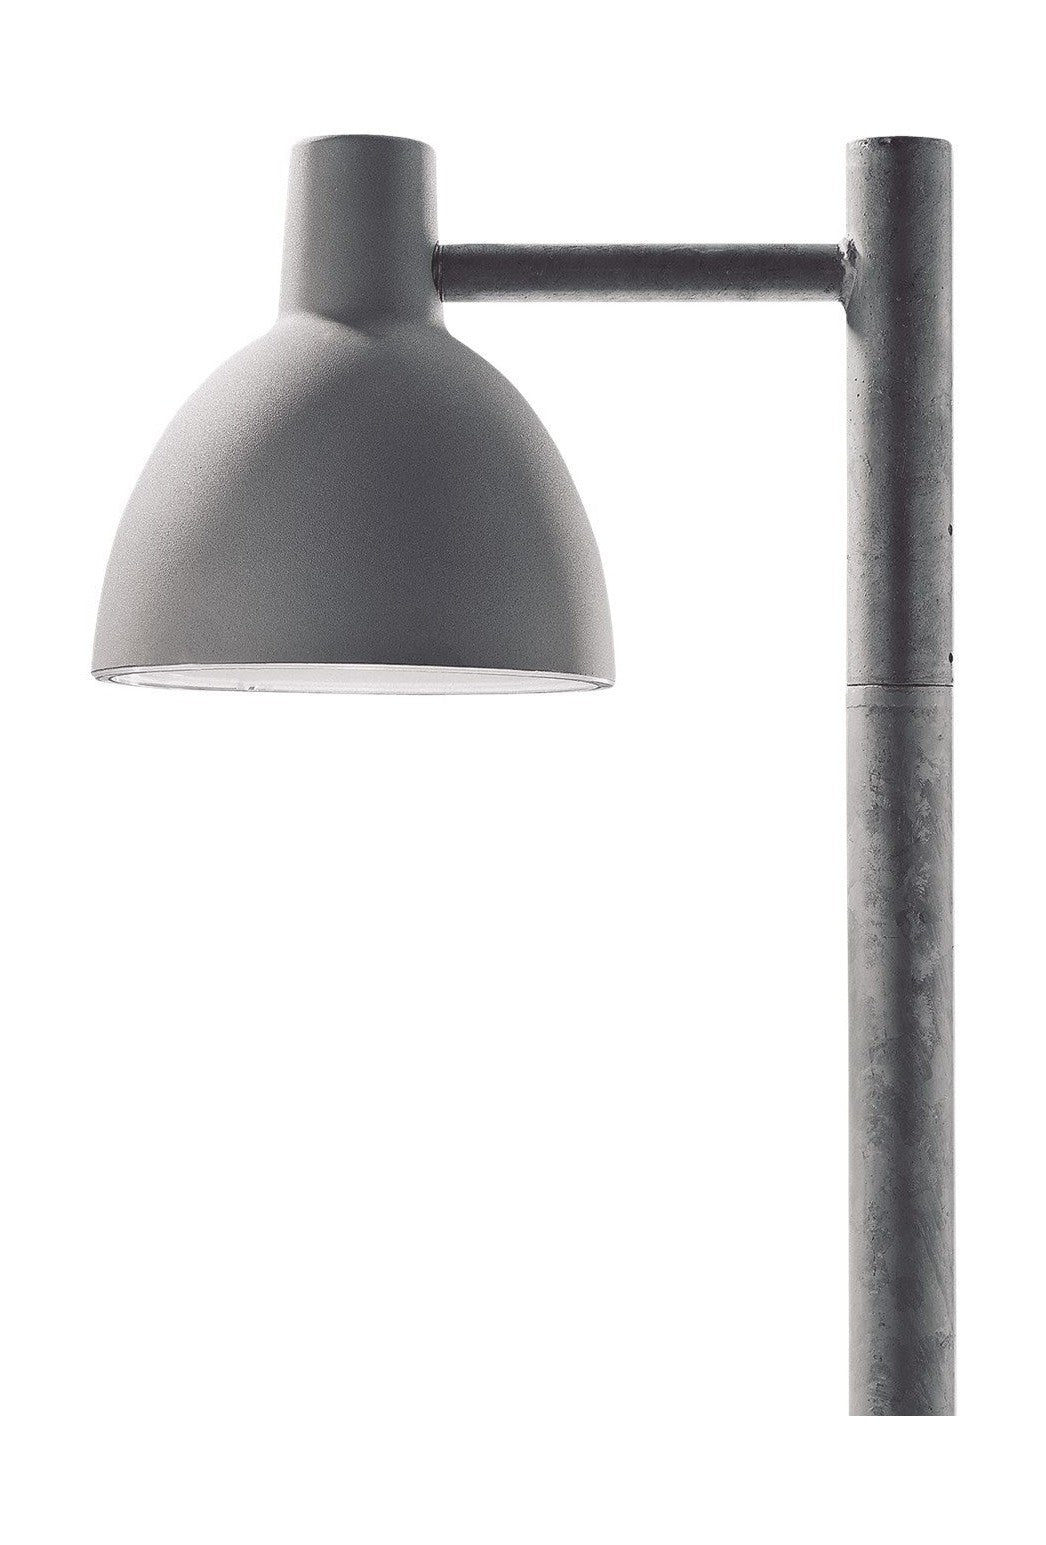 Louis Poulsen gegenüber BOD 29 Post -II -LED 4000 K 20 W Ø6.0 cm, Aluminium